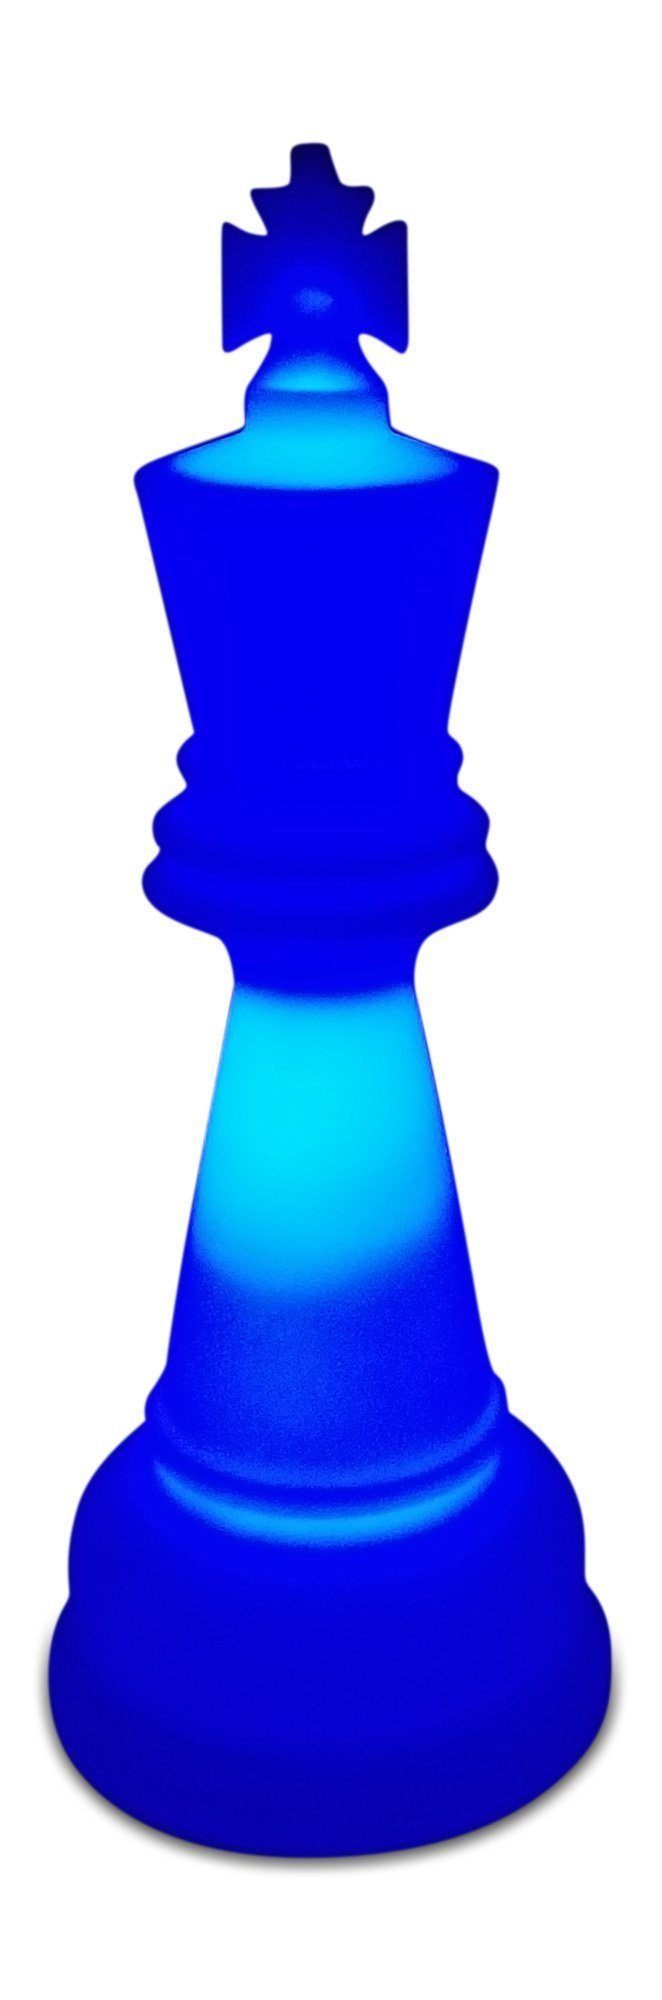 MegaChess 26 Inch Premium Plastic King Light-Up Giant Chess Piece - Blue |  | GiantChessUSA